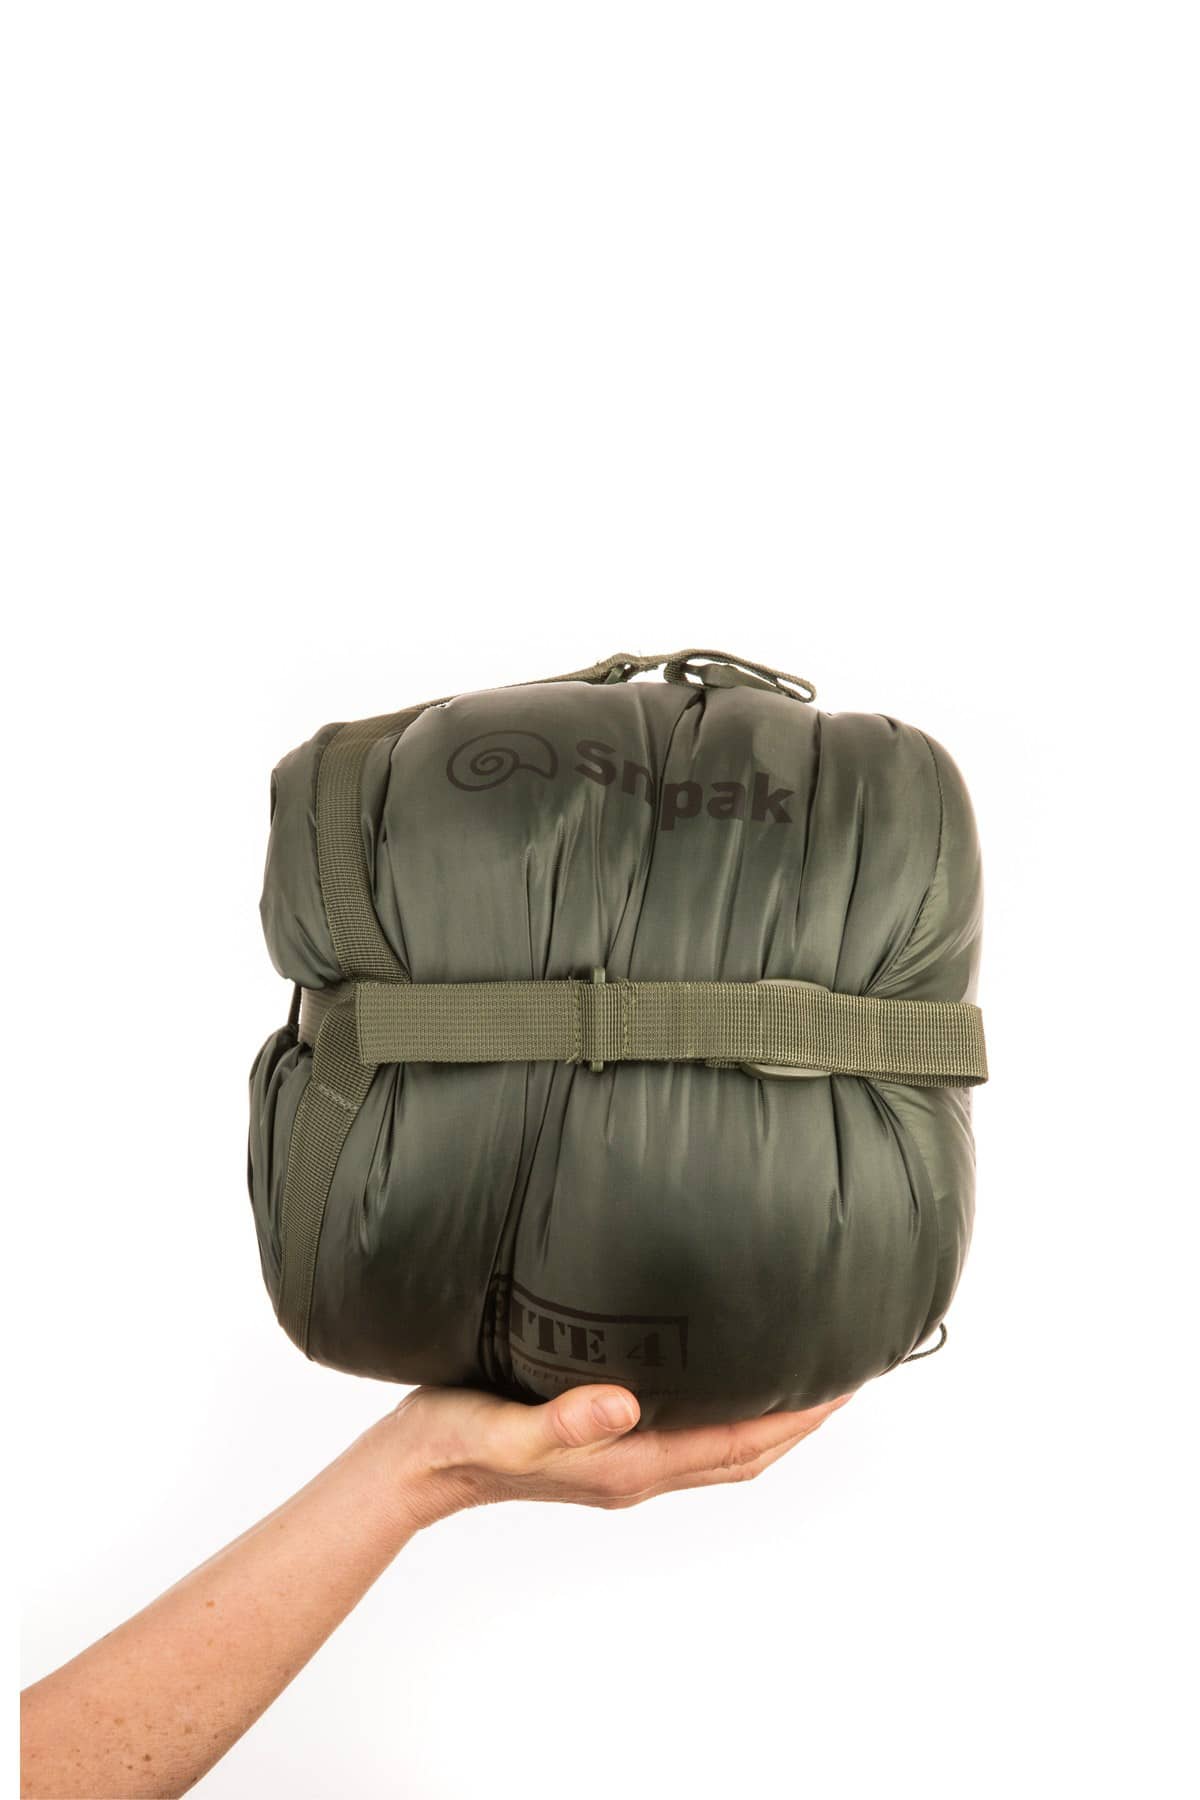 Snugpak Softie Elite 4 Sleeping Bag - Survival Supplies Australia